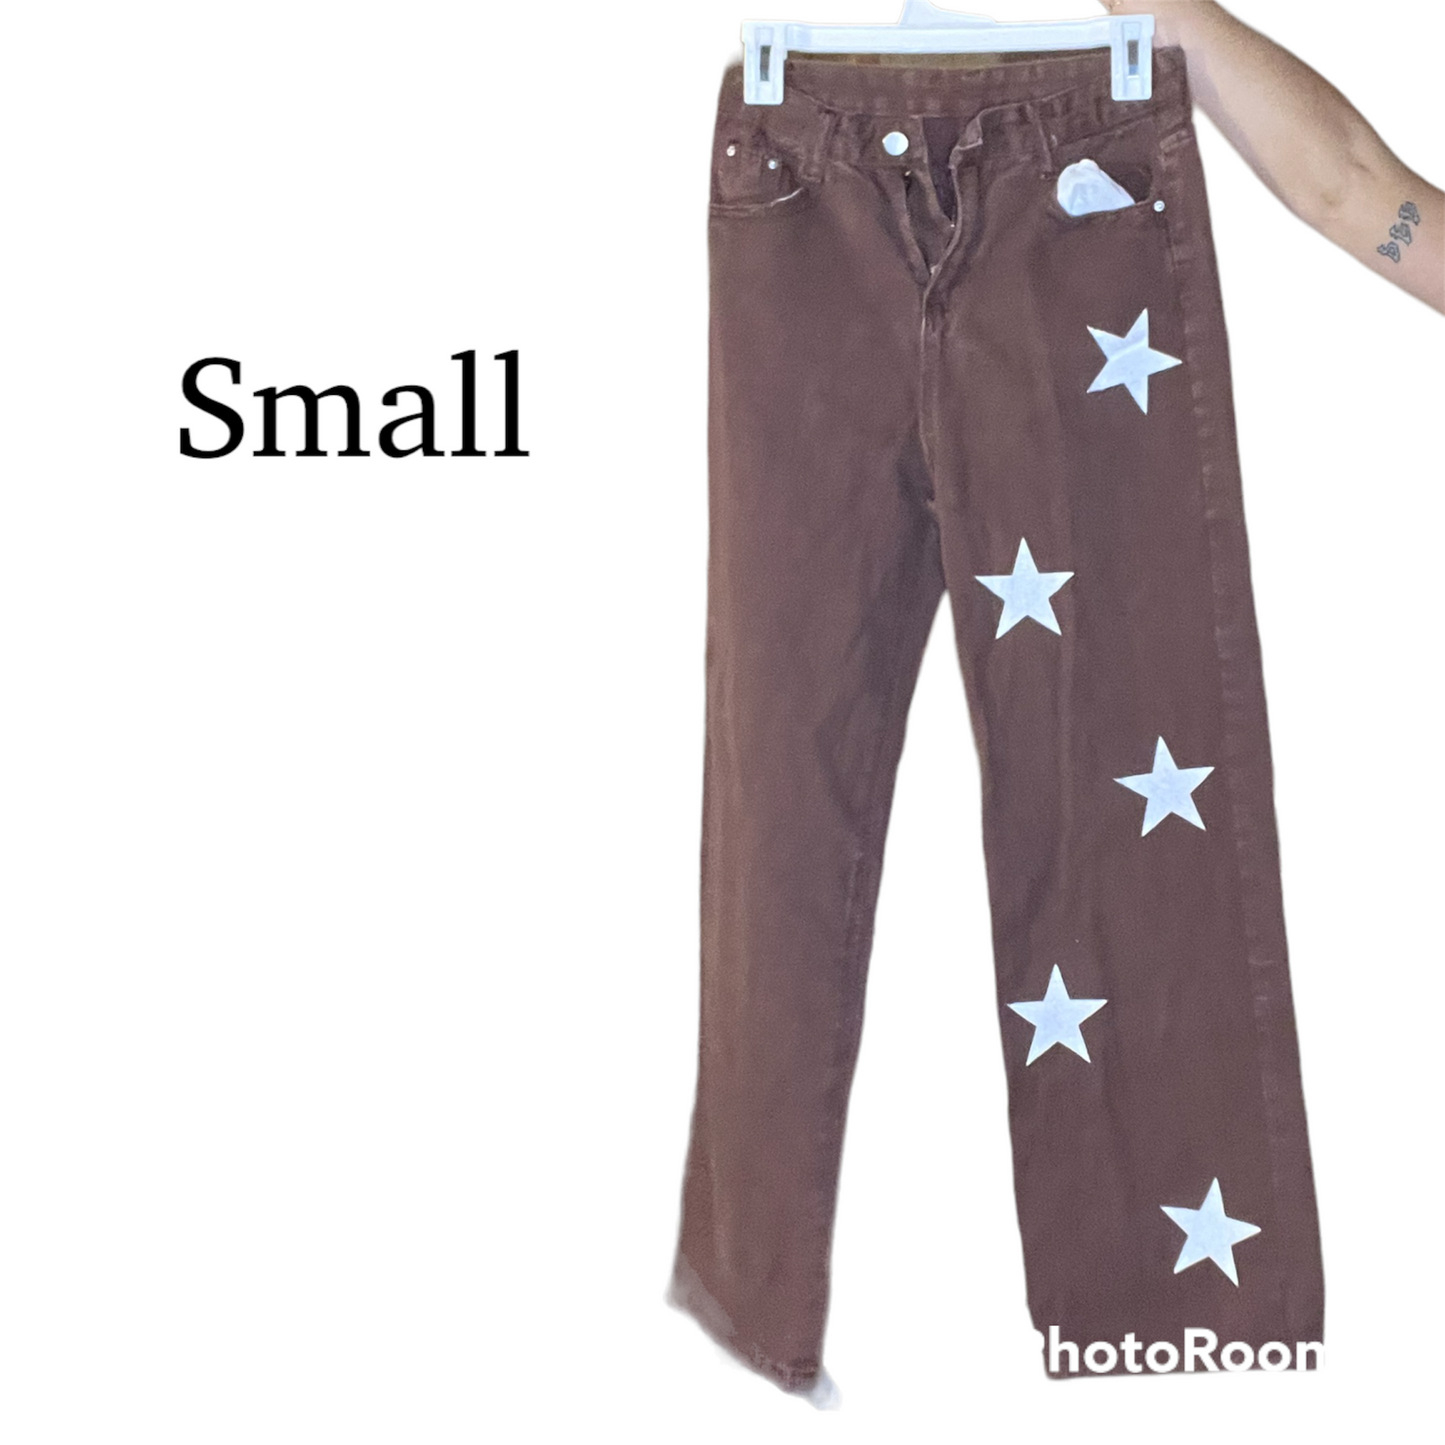 Brown star pants